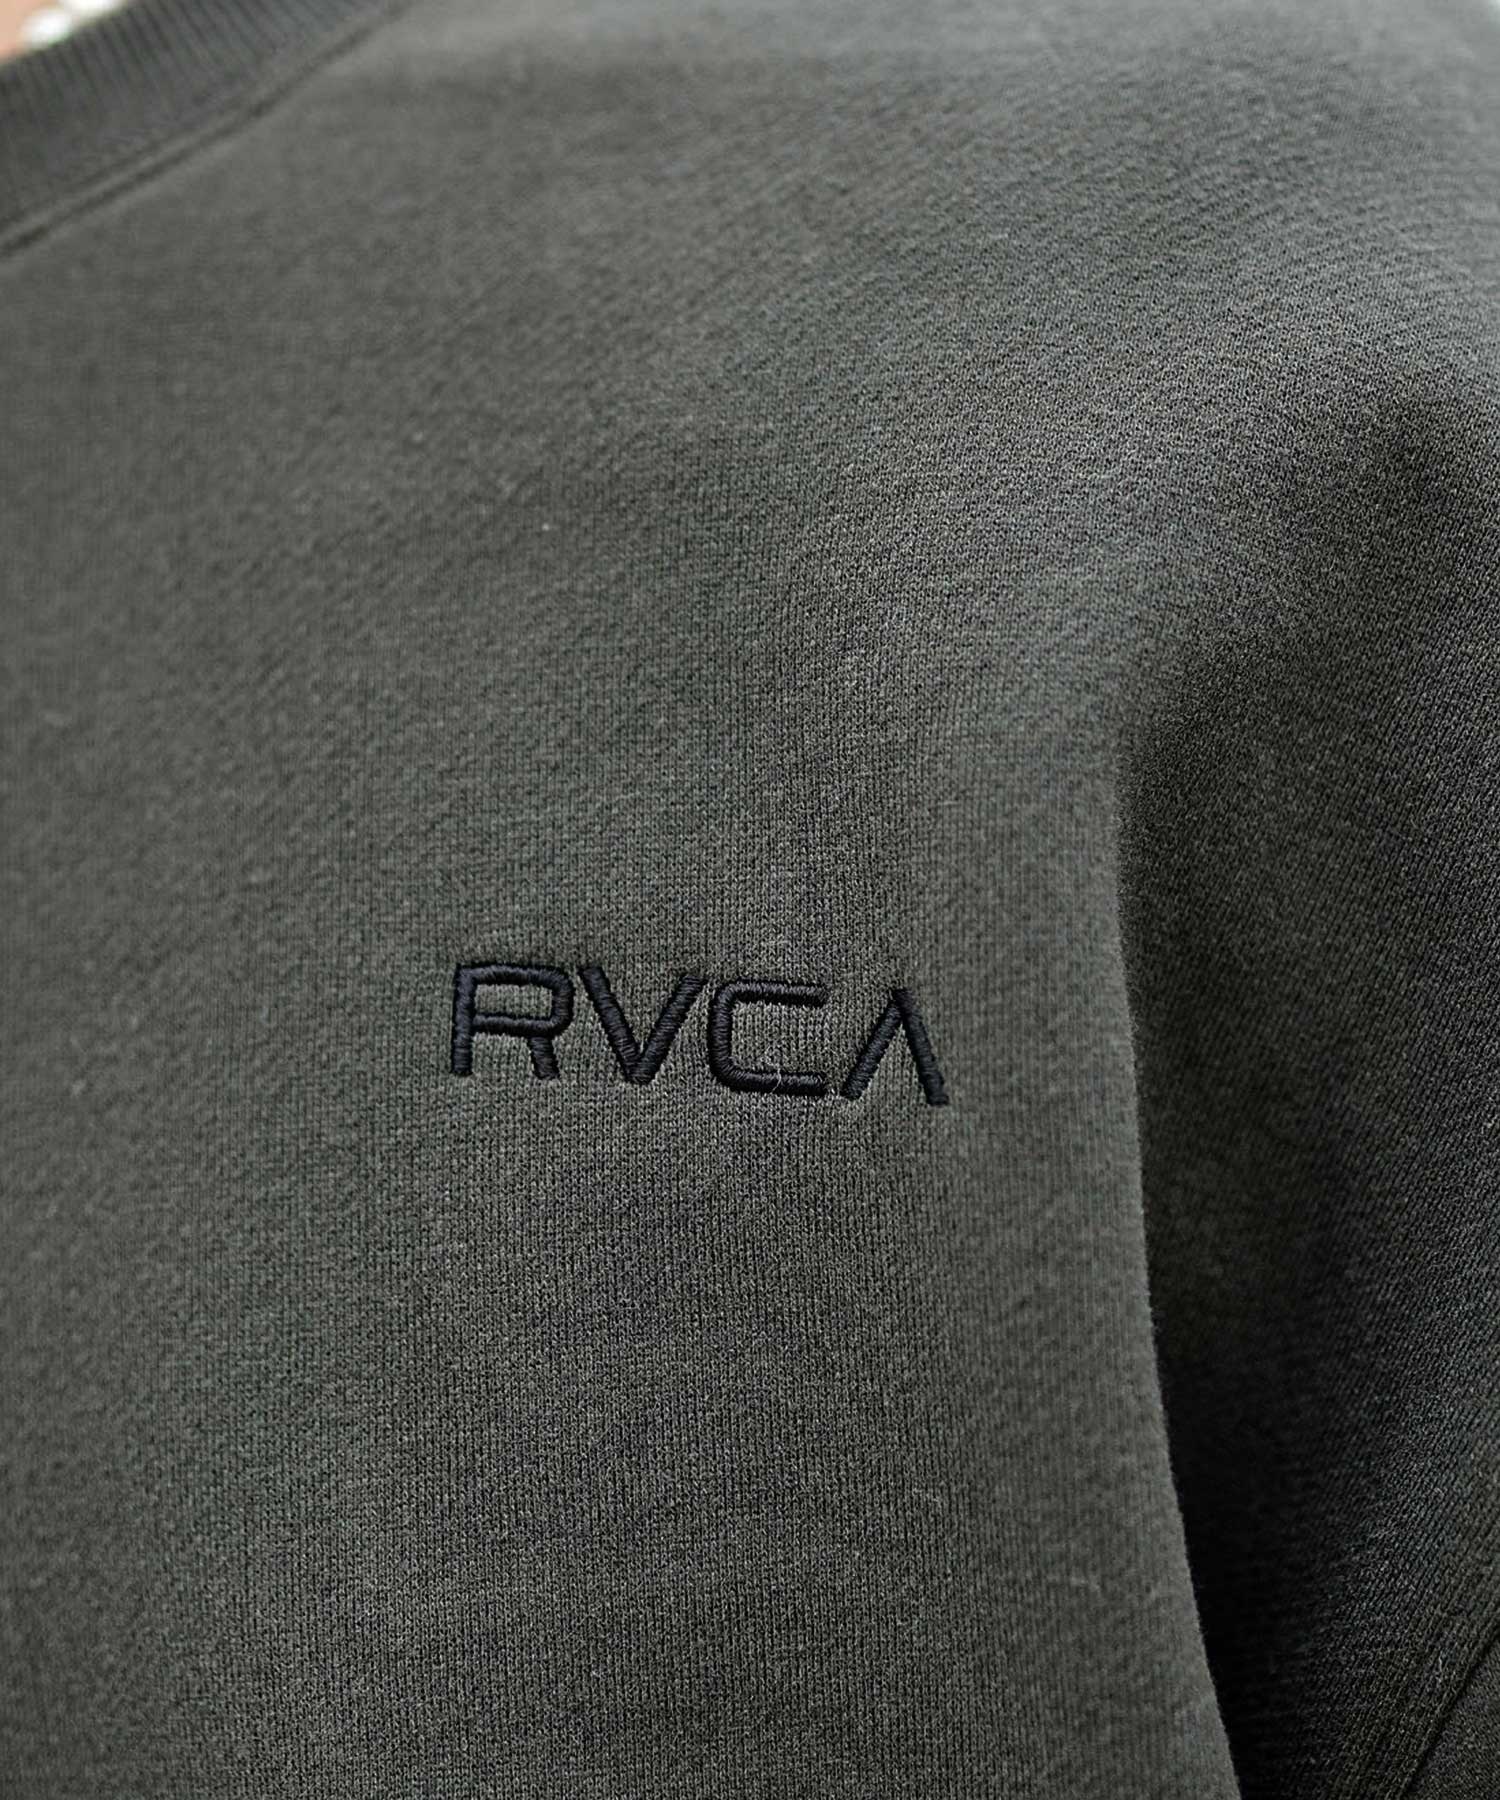 RVCA/ルーカ FAKE RVCA CR メンズ トレーナー クルーネック スウェット バックプリント 裏起毛 BD042-150(ANW-S)